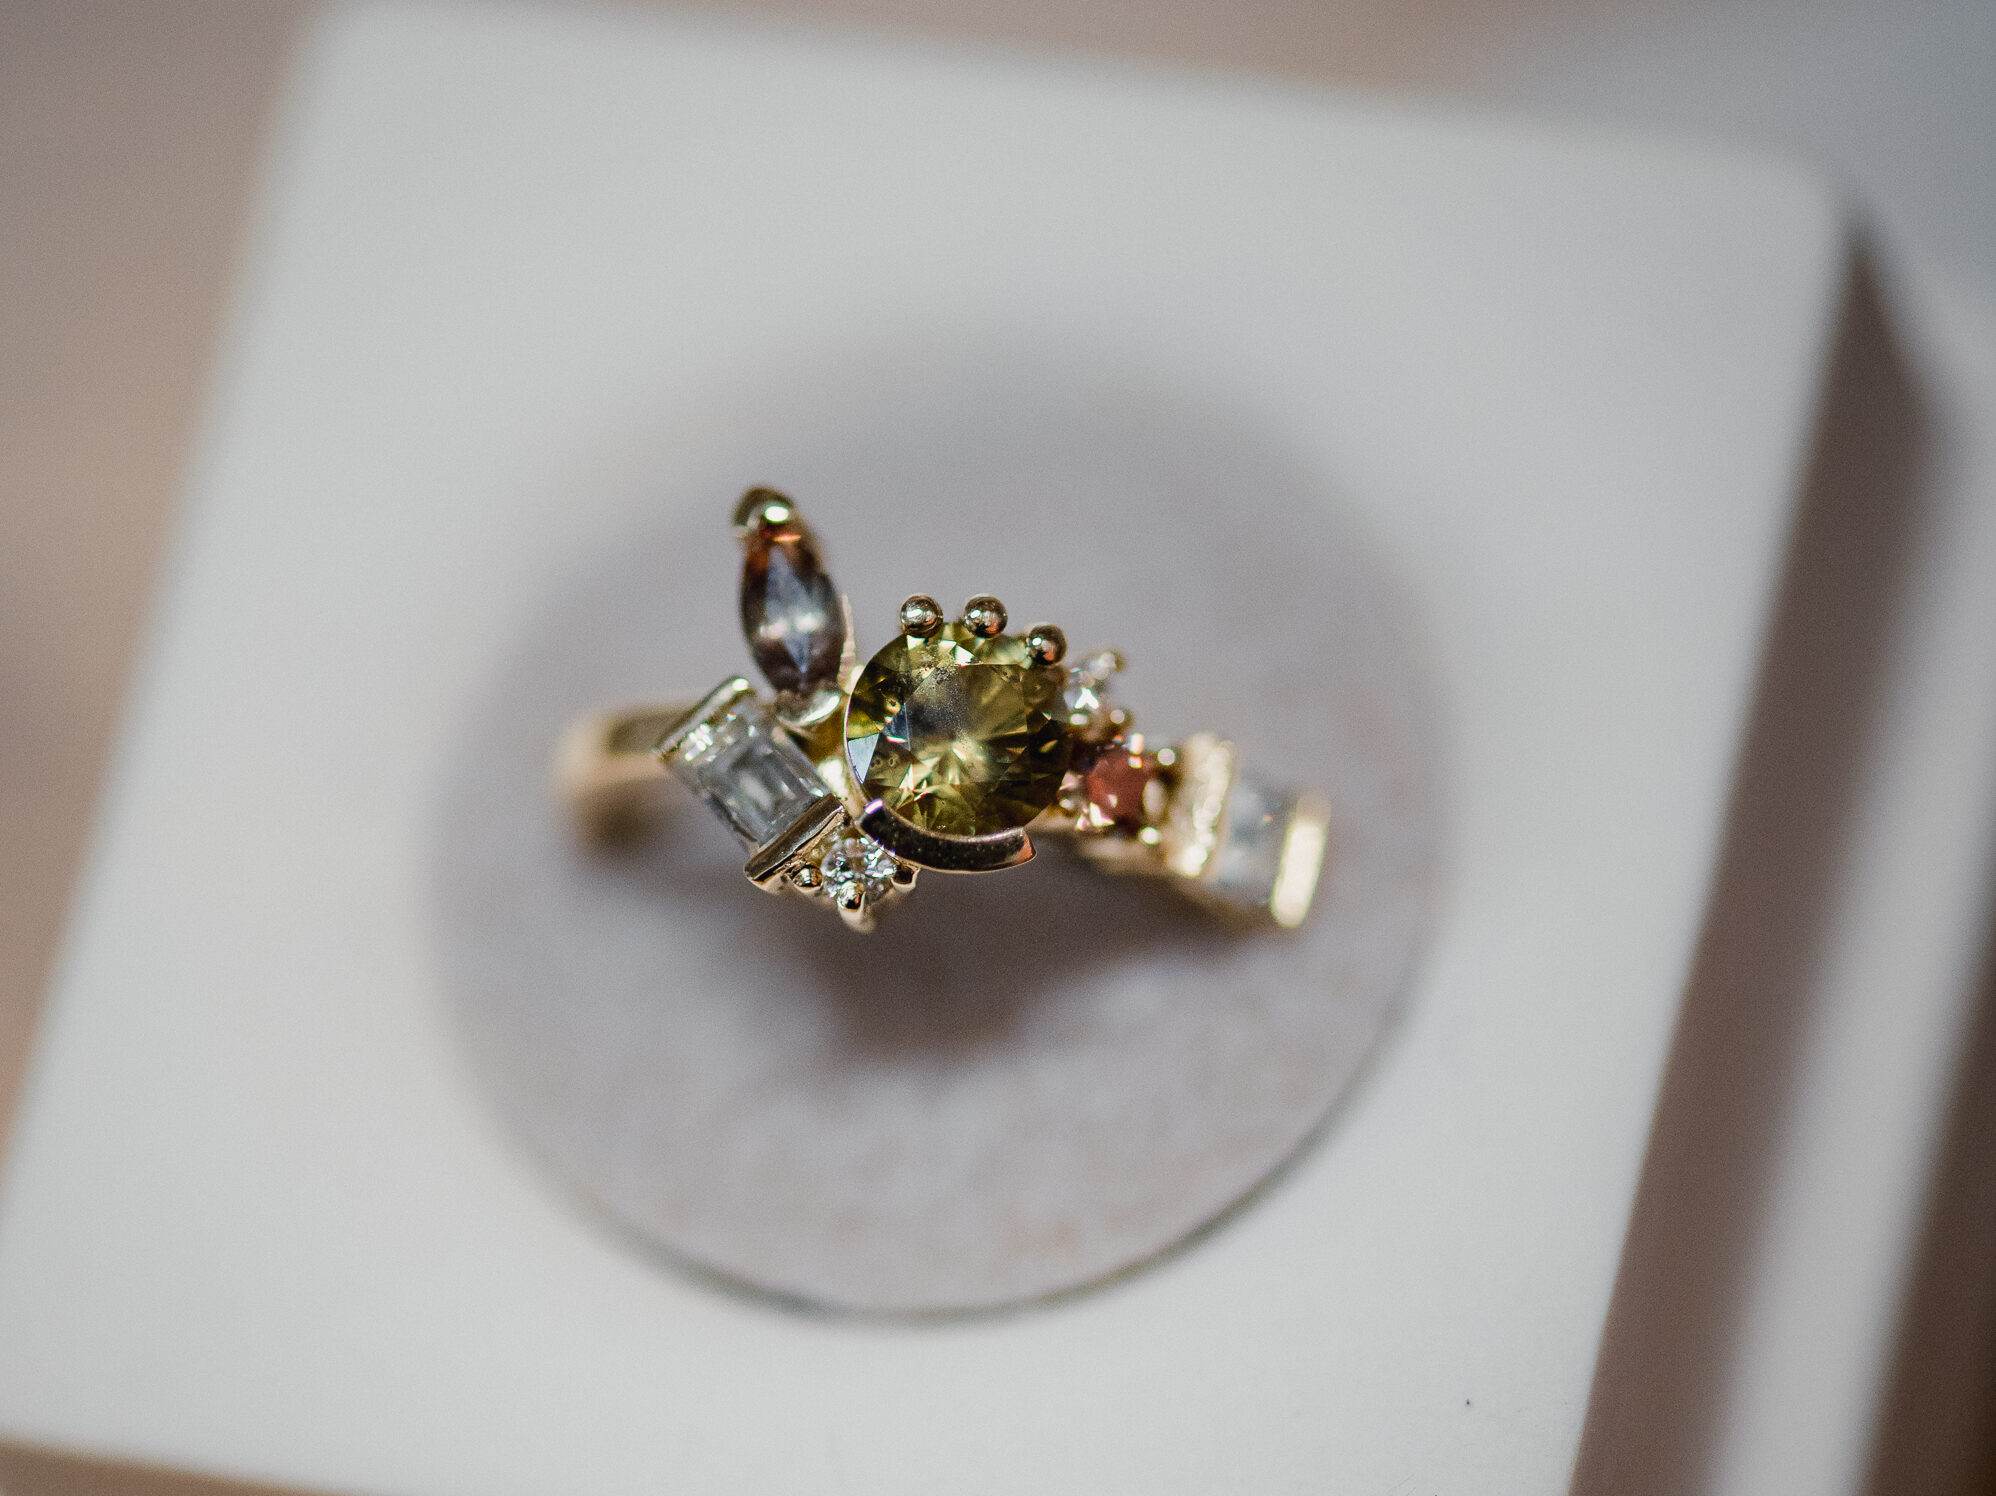 Custom heirloom ring in focus sitting in a porcelain ring box